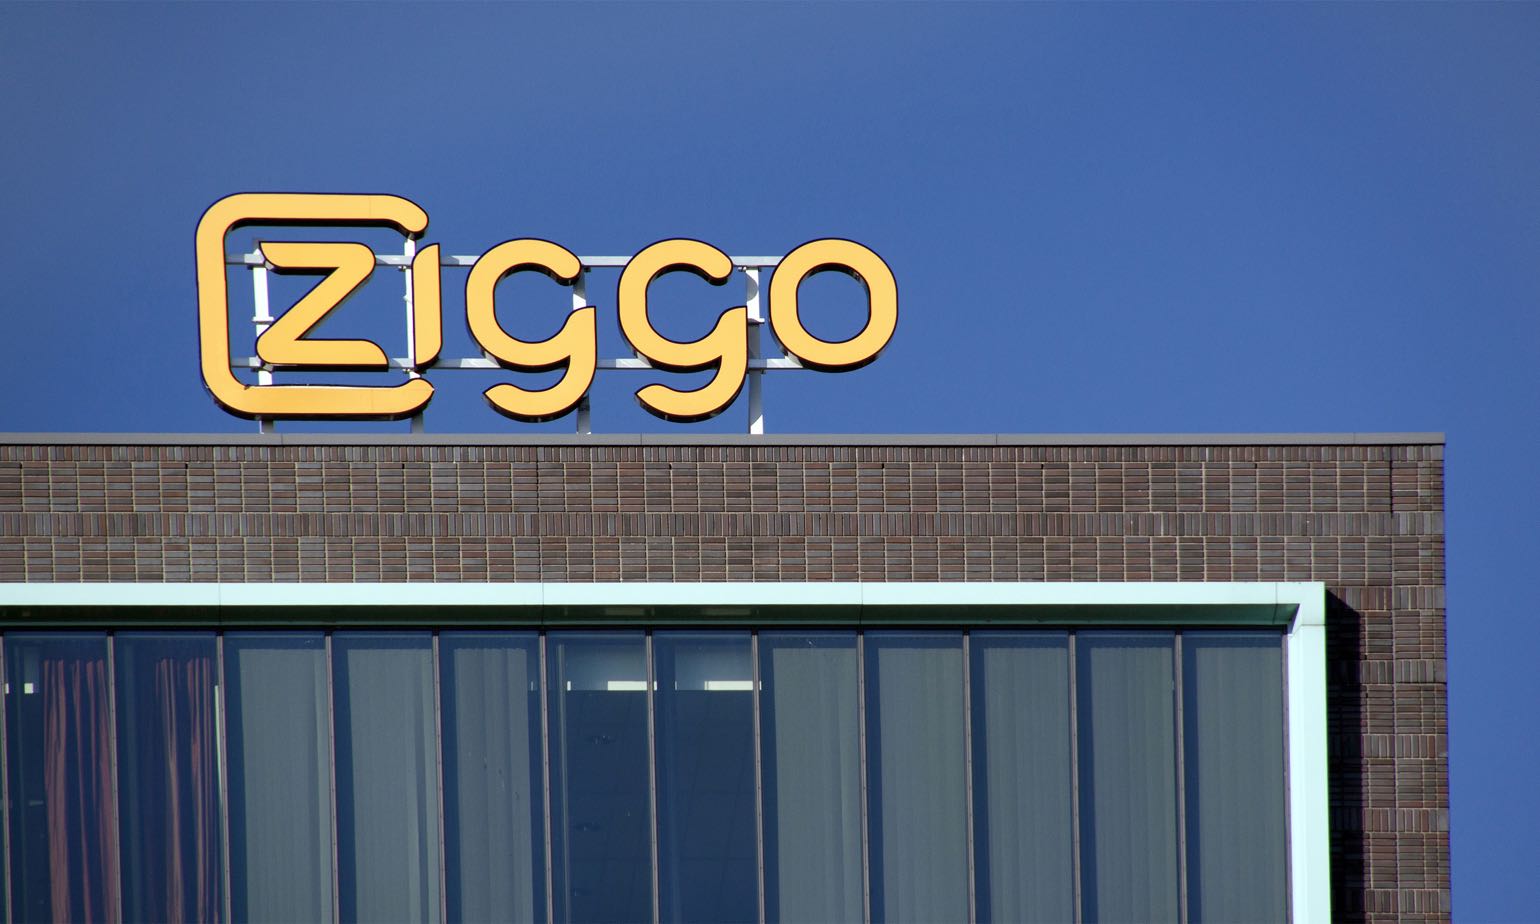 Ziggo launched next generation media player